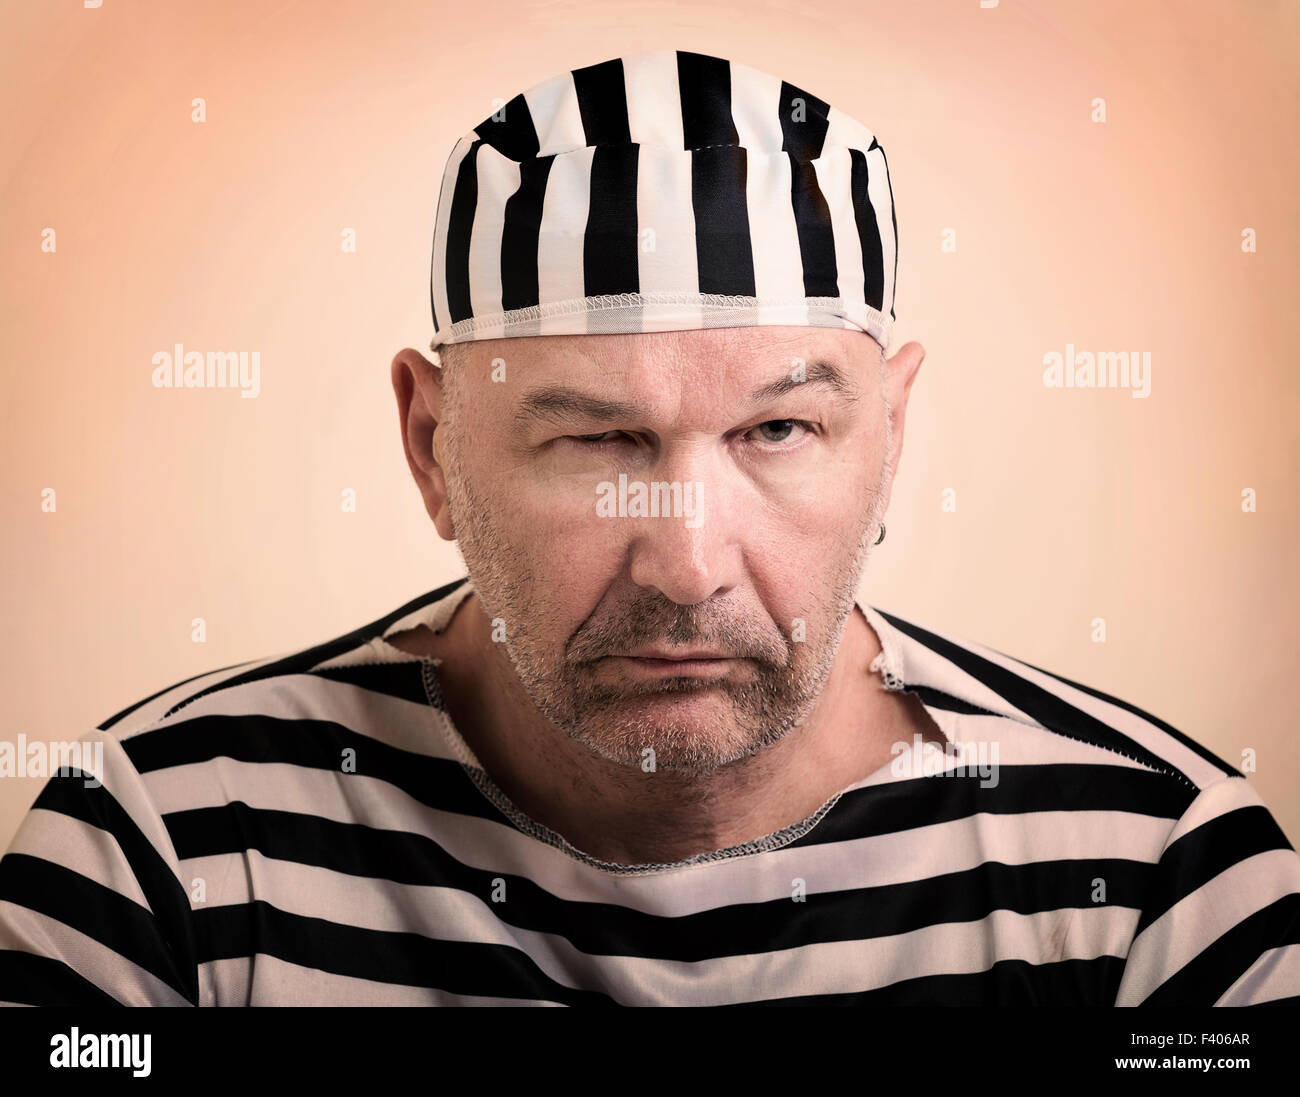 man prisoner Stock Photo